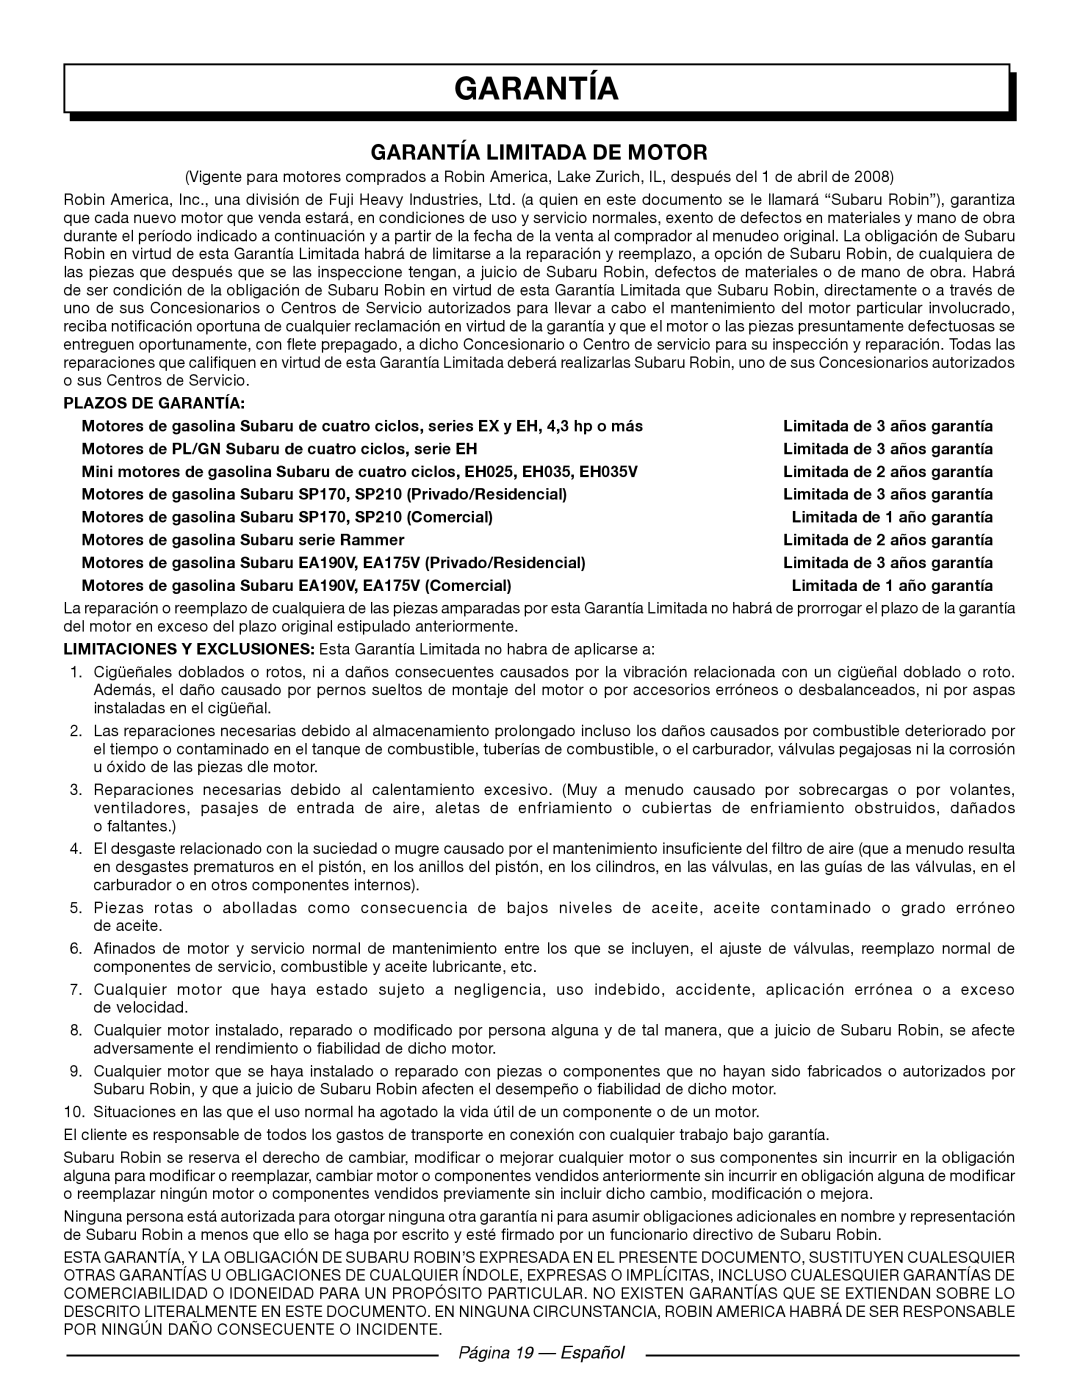 Homelite UT905011 manuel dutilisation Garantía Limitada De Motor, Página 19 — Español, Plazos De Garantía 